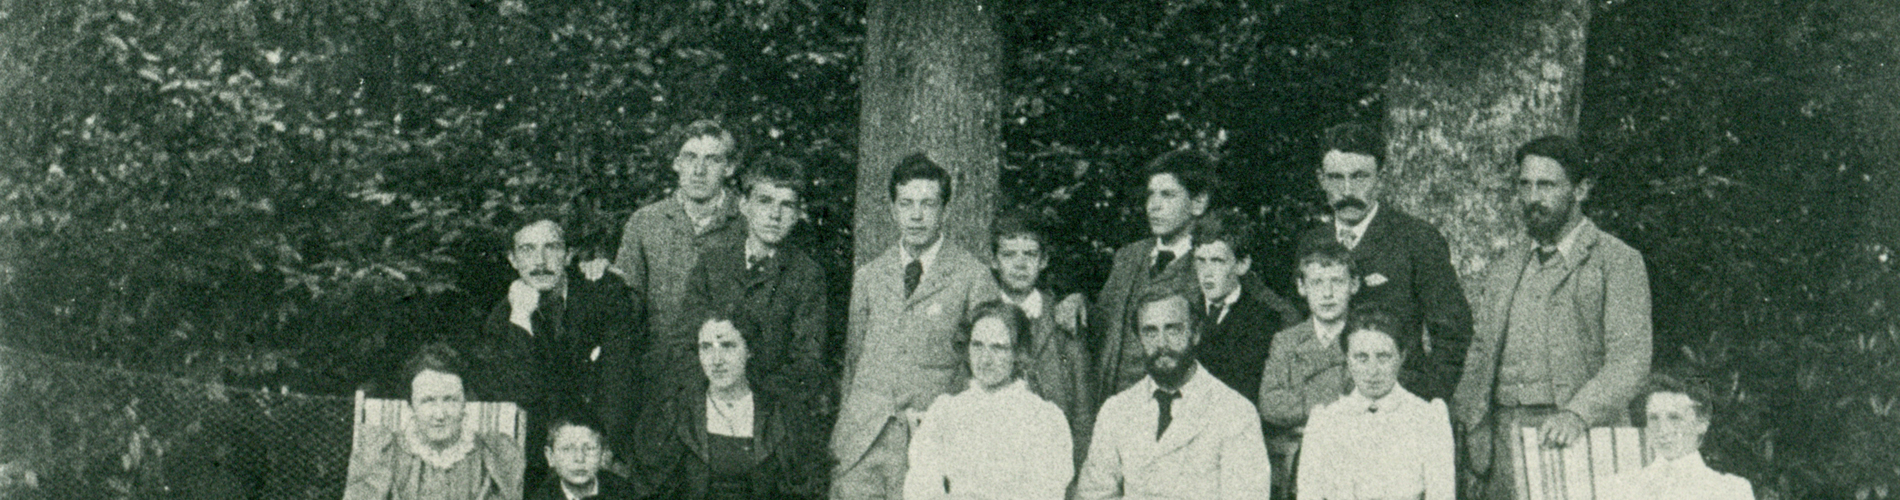 1893 Group